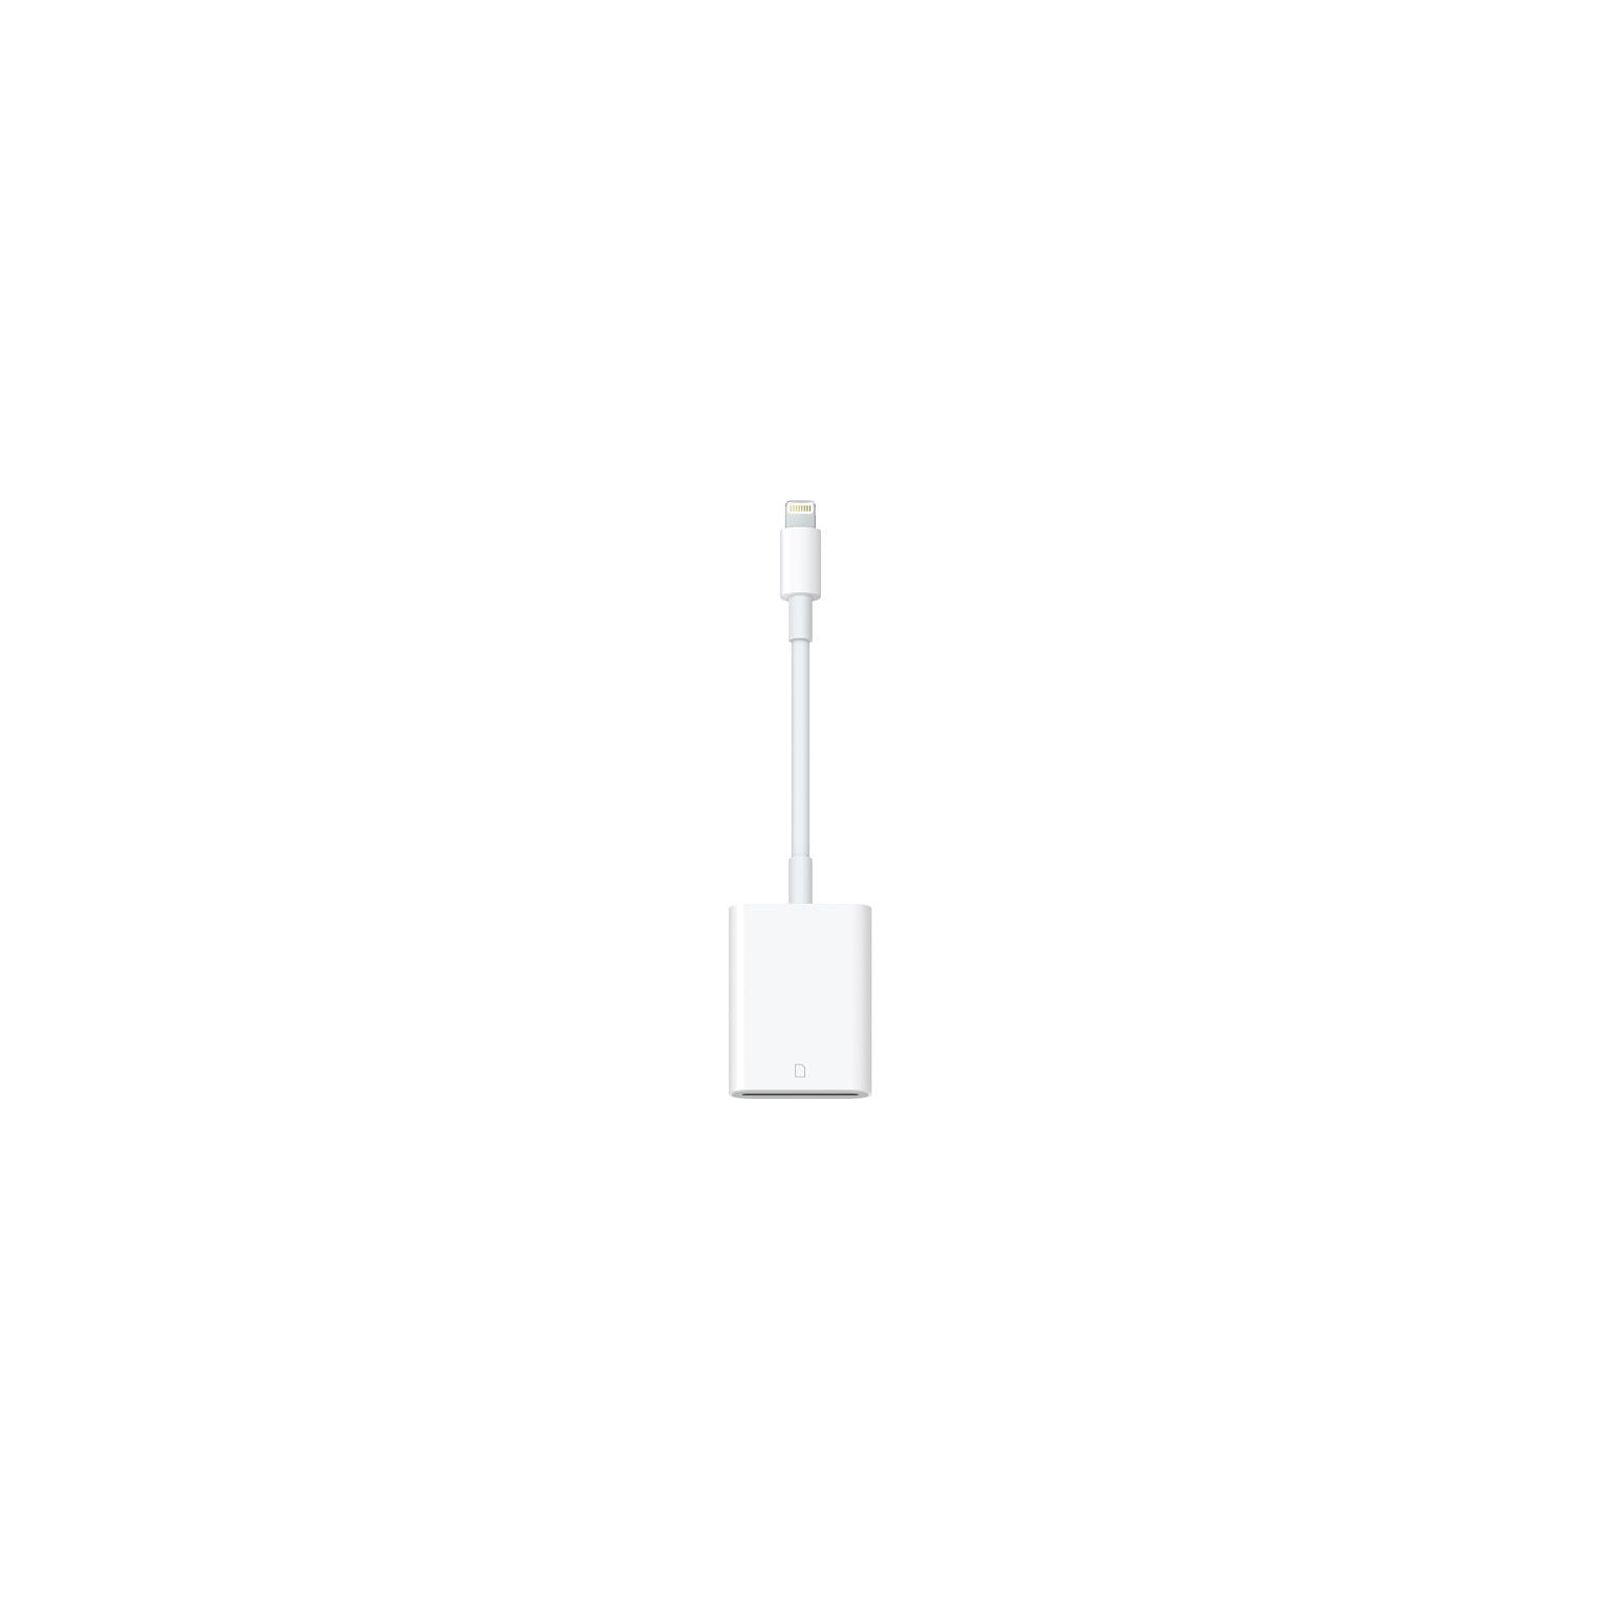 Переходник Lightning to SD Card Camera Reader (USB 3.0) Apple (MJYT2ZM/A)